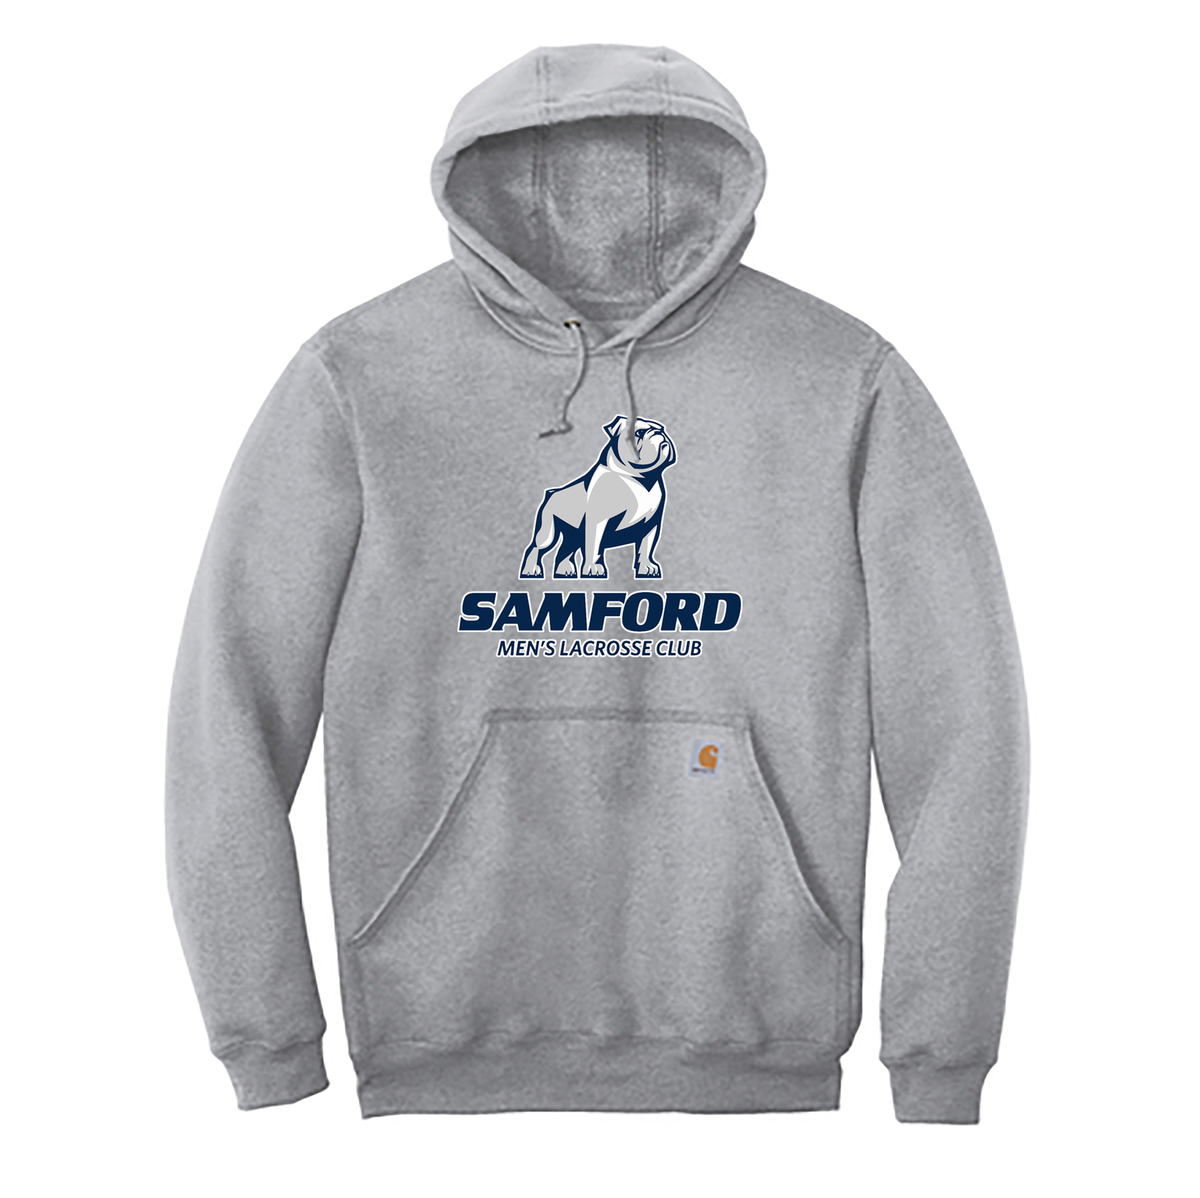 Samford University Lacrosse Club Carhartt Midweight Hooded Sweatshirt